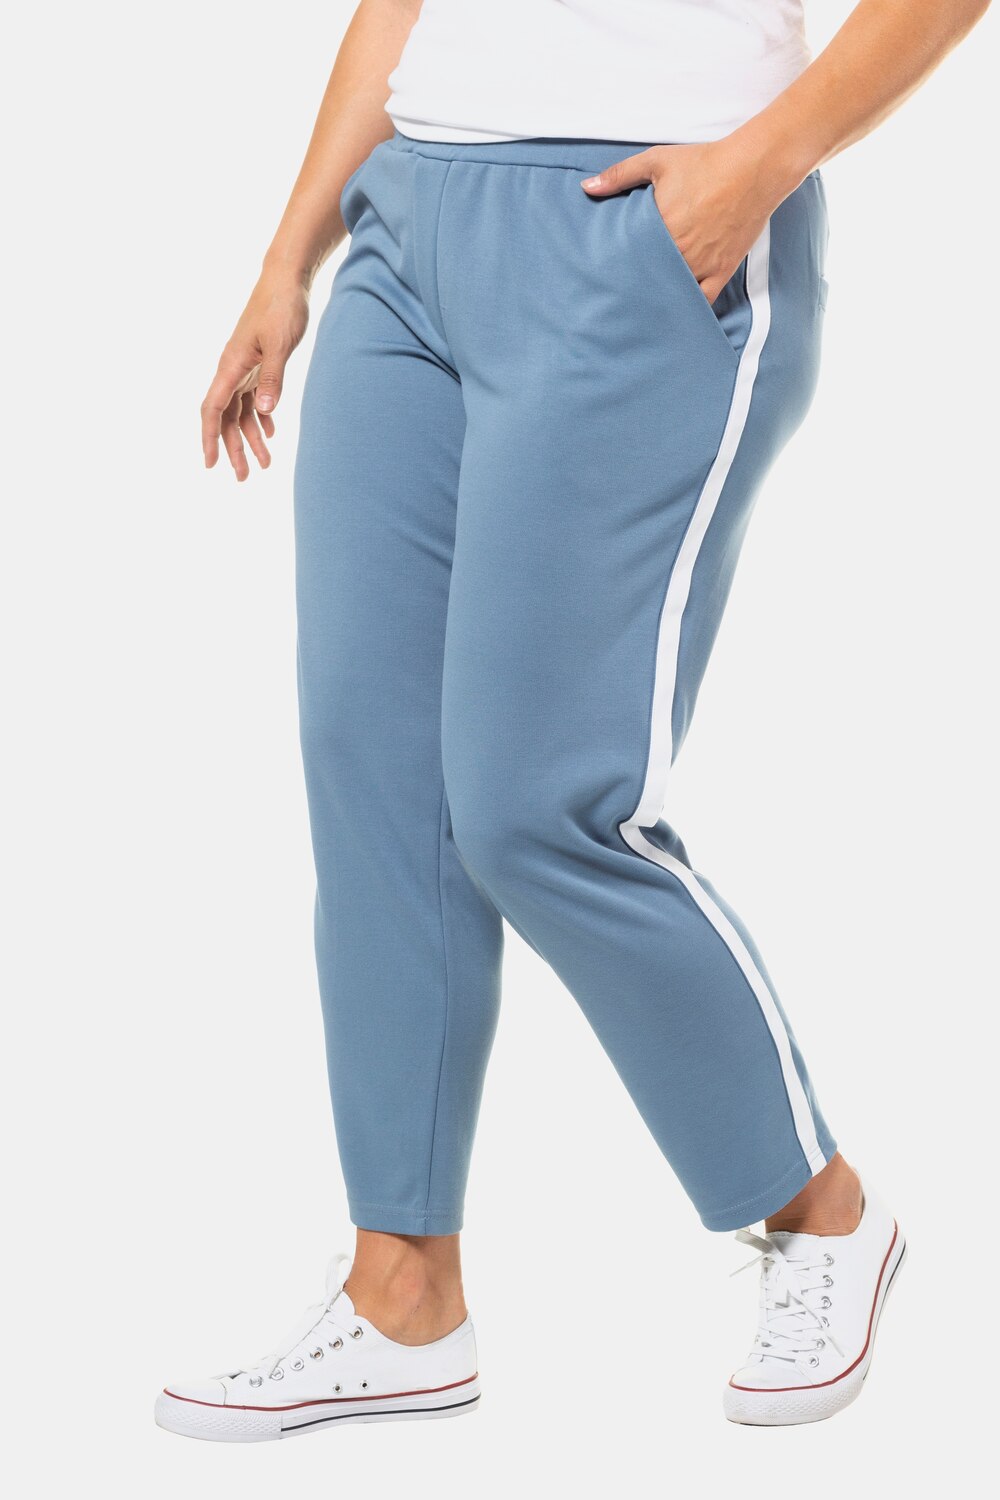 Plus Size Sweatpants, Woman, blue, size: 18, viscose/polyester, Studio Untold